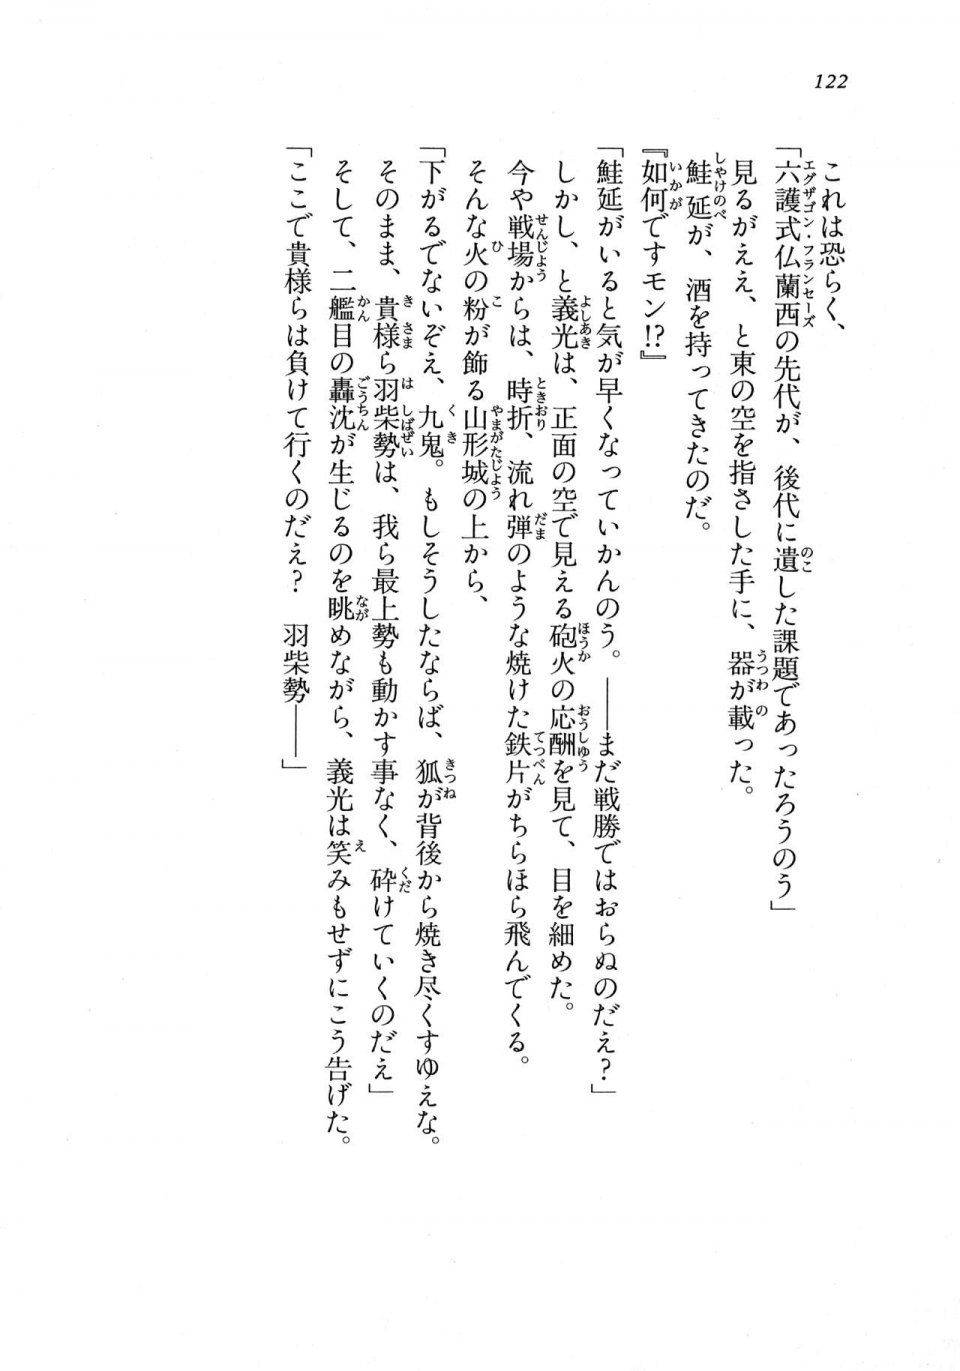 Kyoukai Senjou no Horizon LN Vol 18(7C) Part 1 - Photo #122